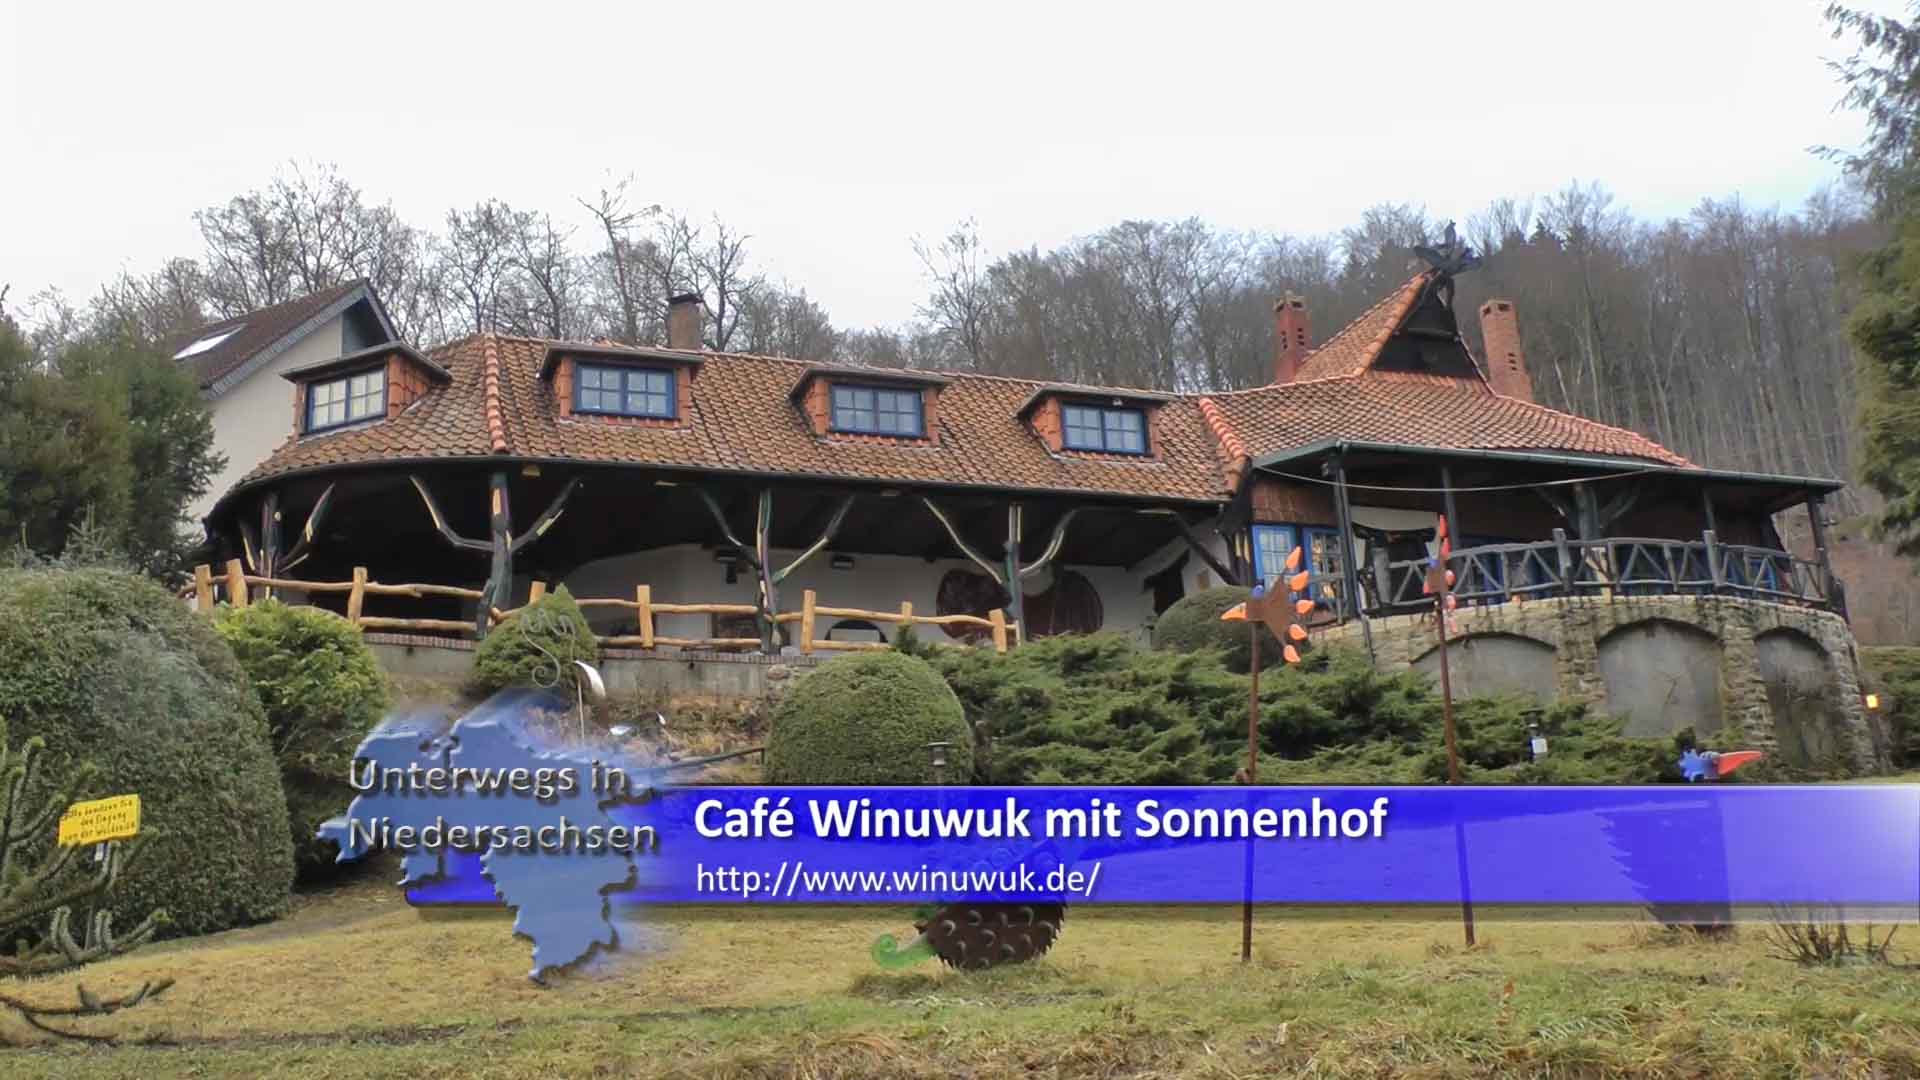 Cafe Winuwuk mit Sonnenhof